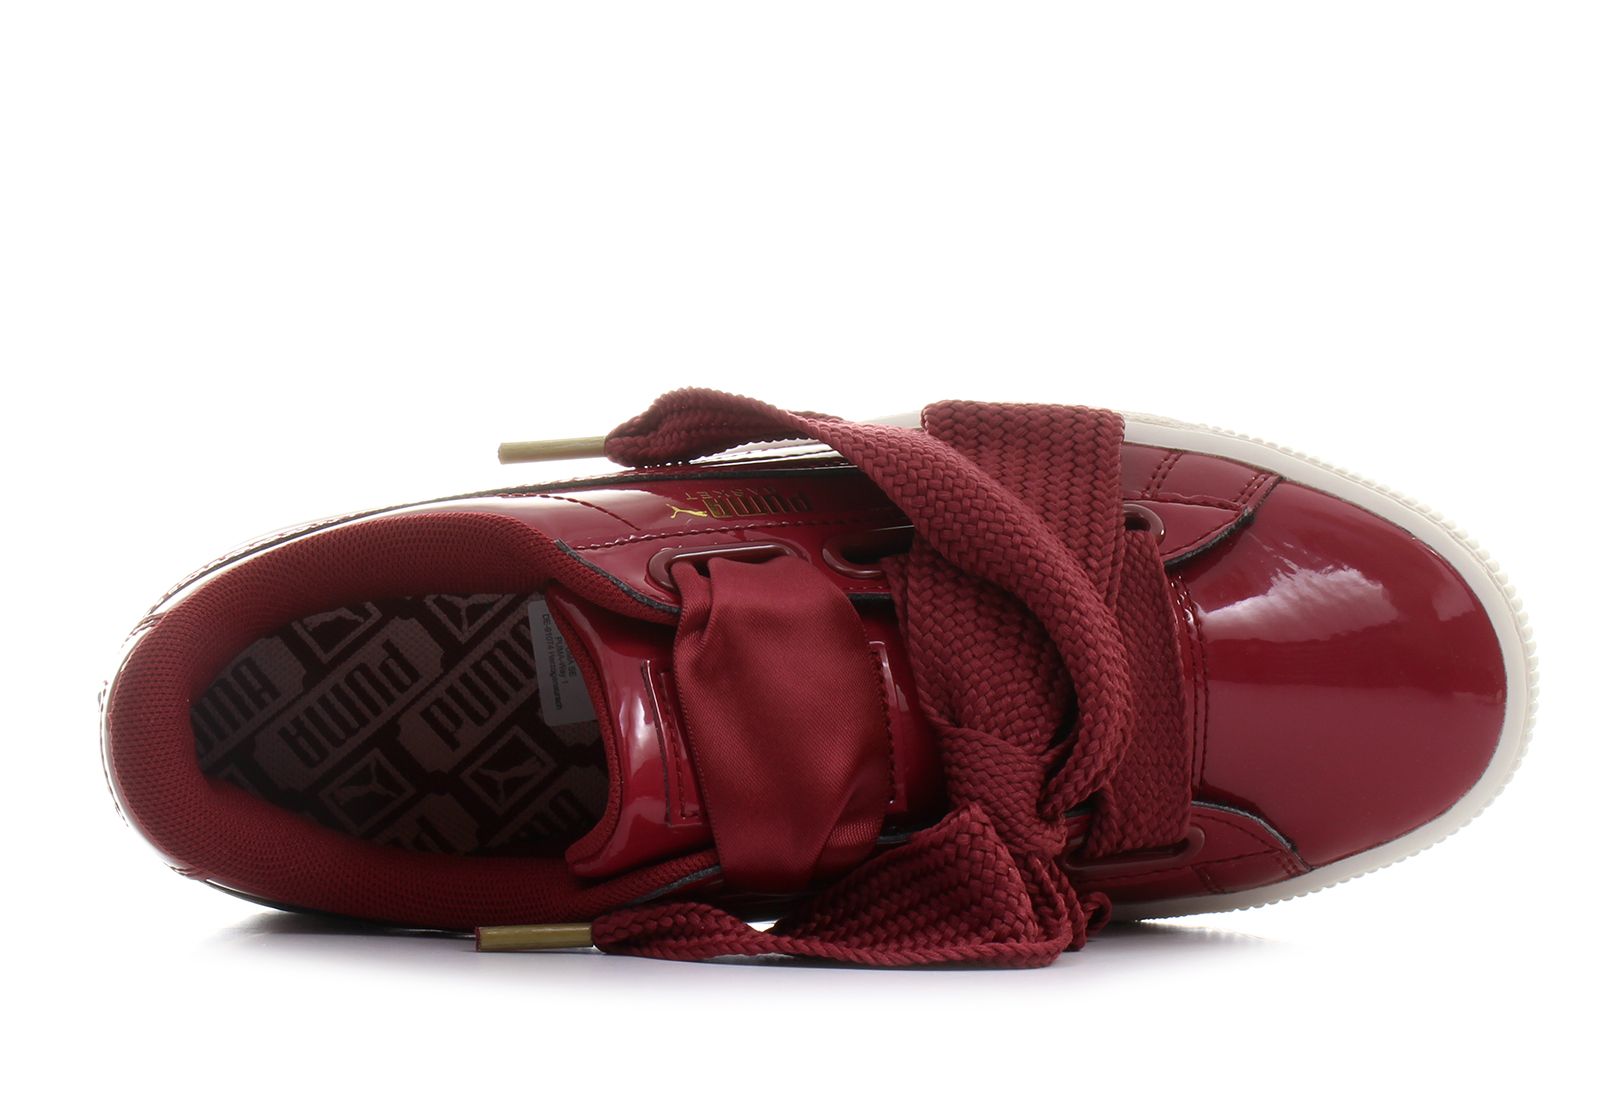 Puma Cipő - Basket Heart Patent Wns - 36307305-red - Office Shoes  Magyarország